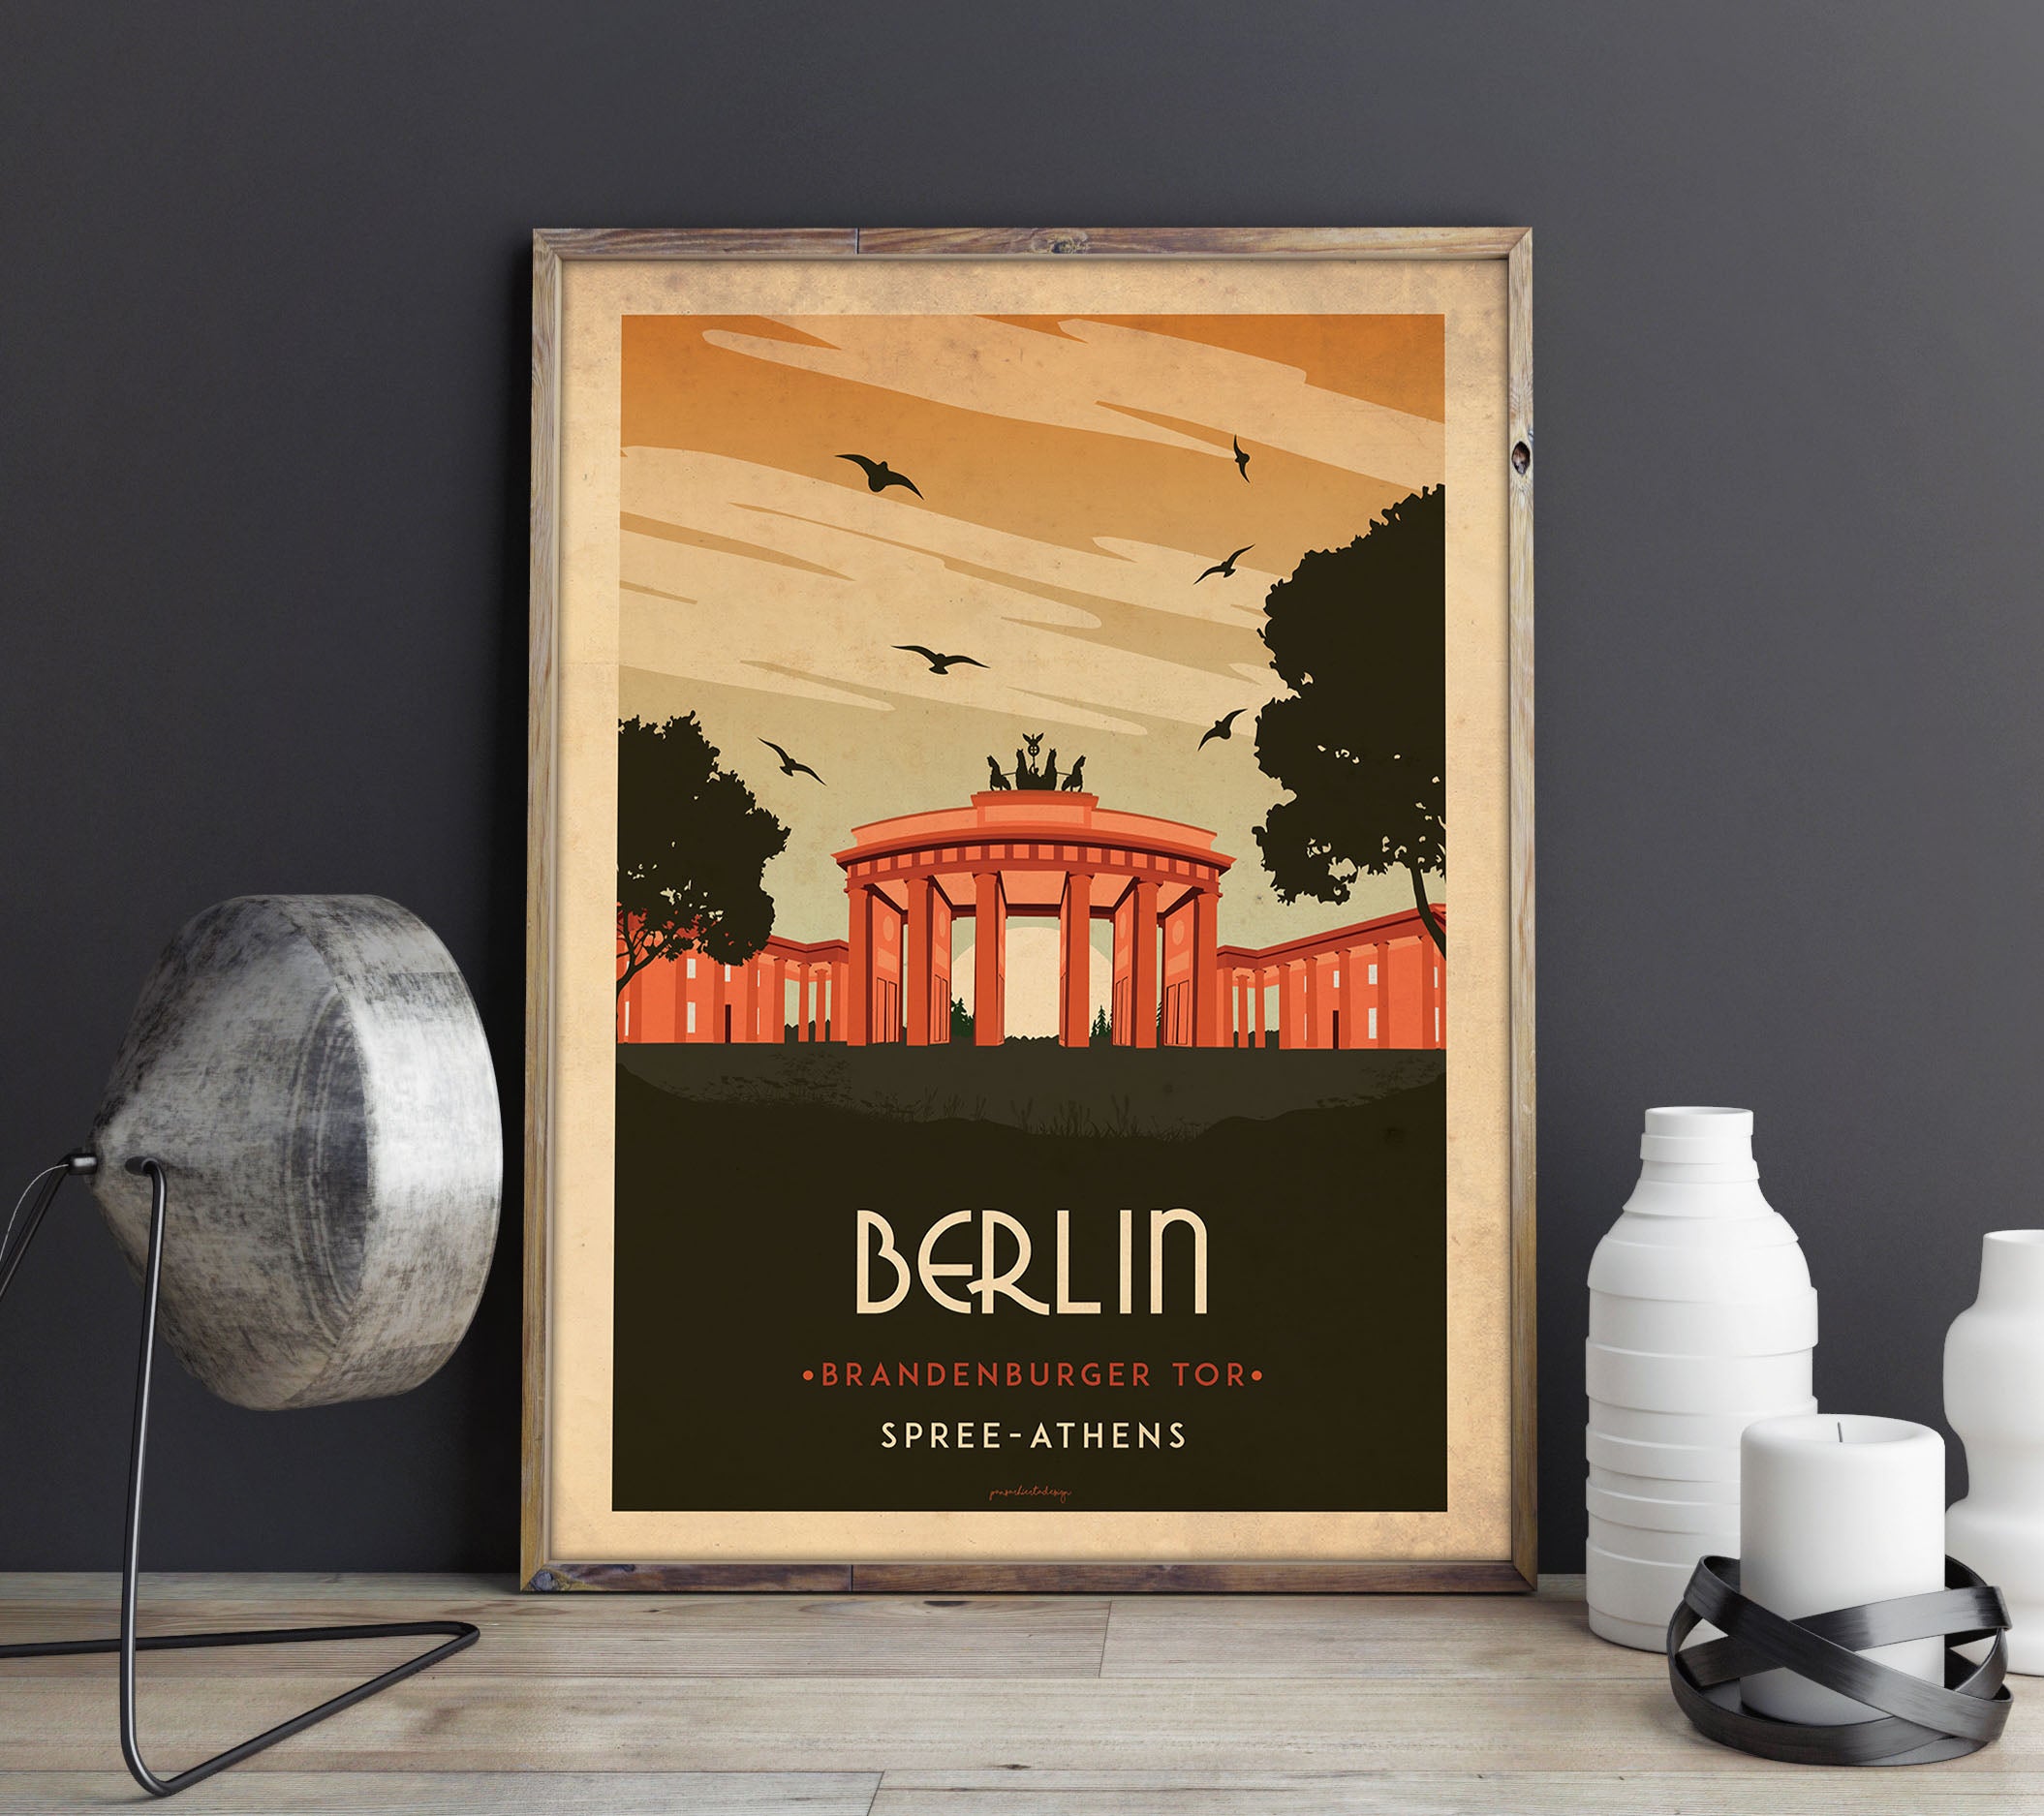 Art deco - Berlin - World collection Posters, affischer, tavlor Pansarhierta